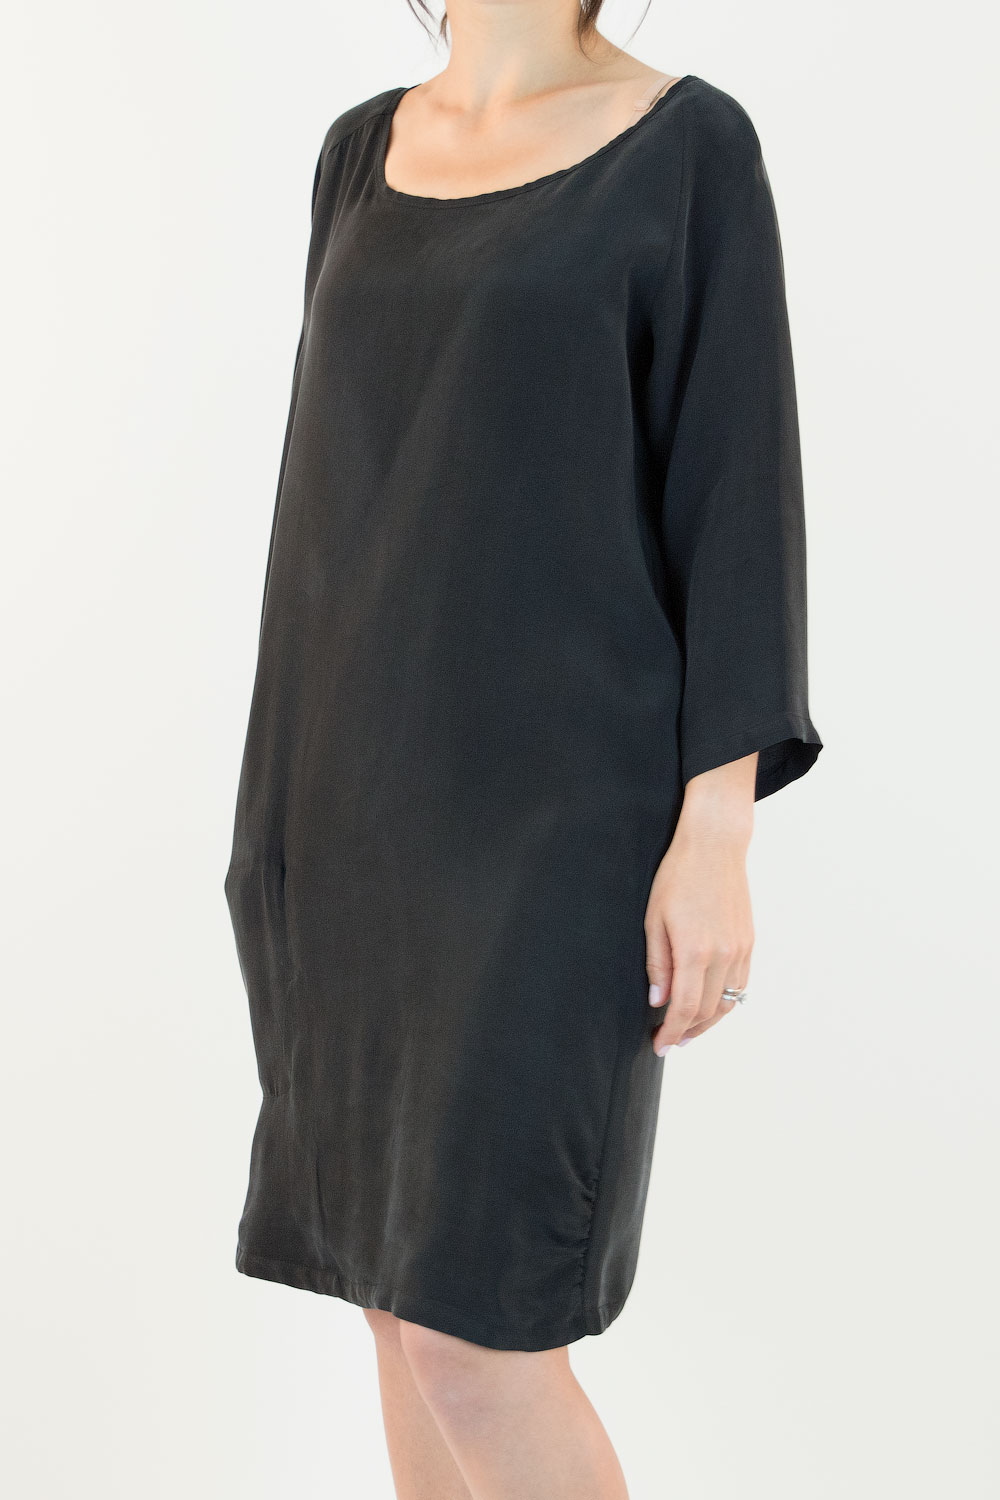 Tunic Designer Dress Asymetric Pocket SISTE'S ITALY Black - CLADDIO